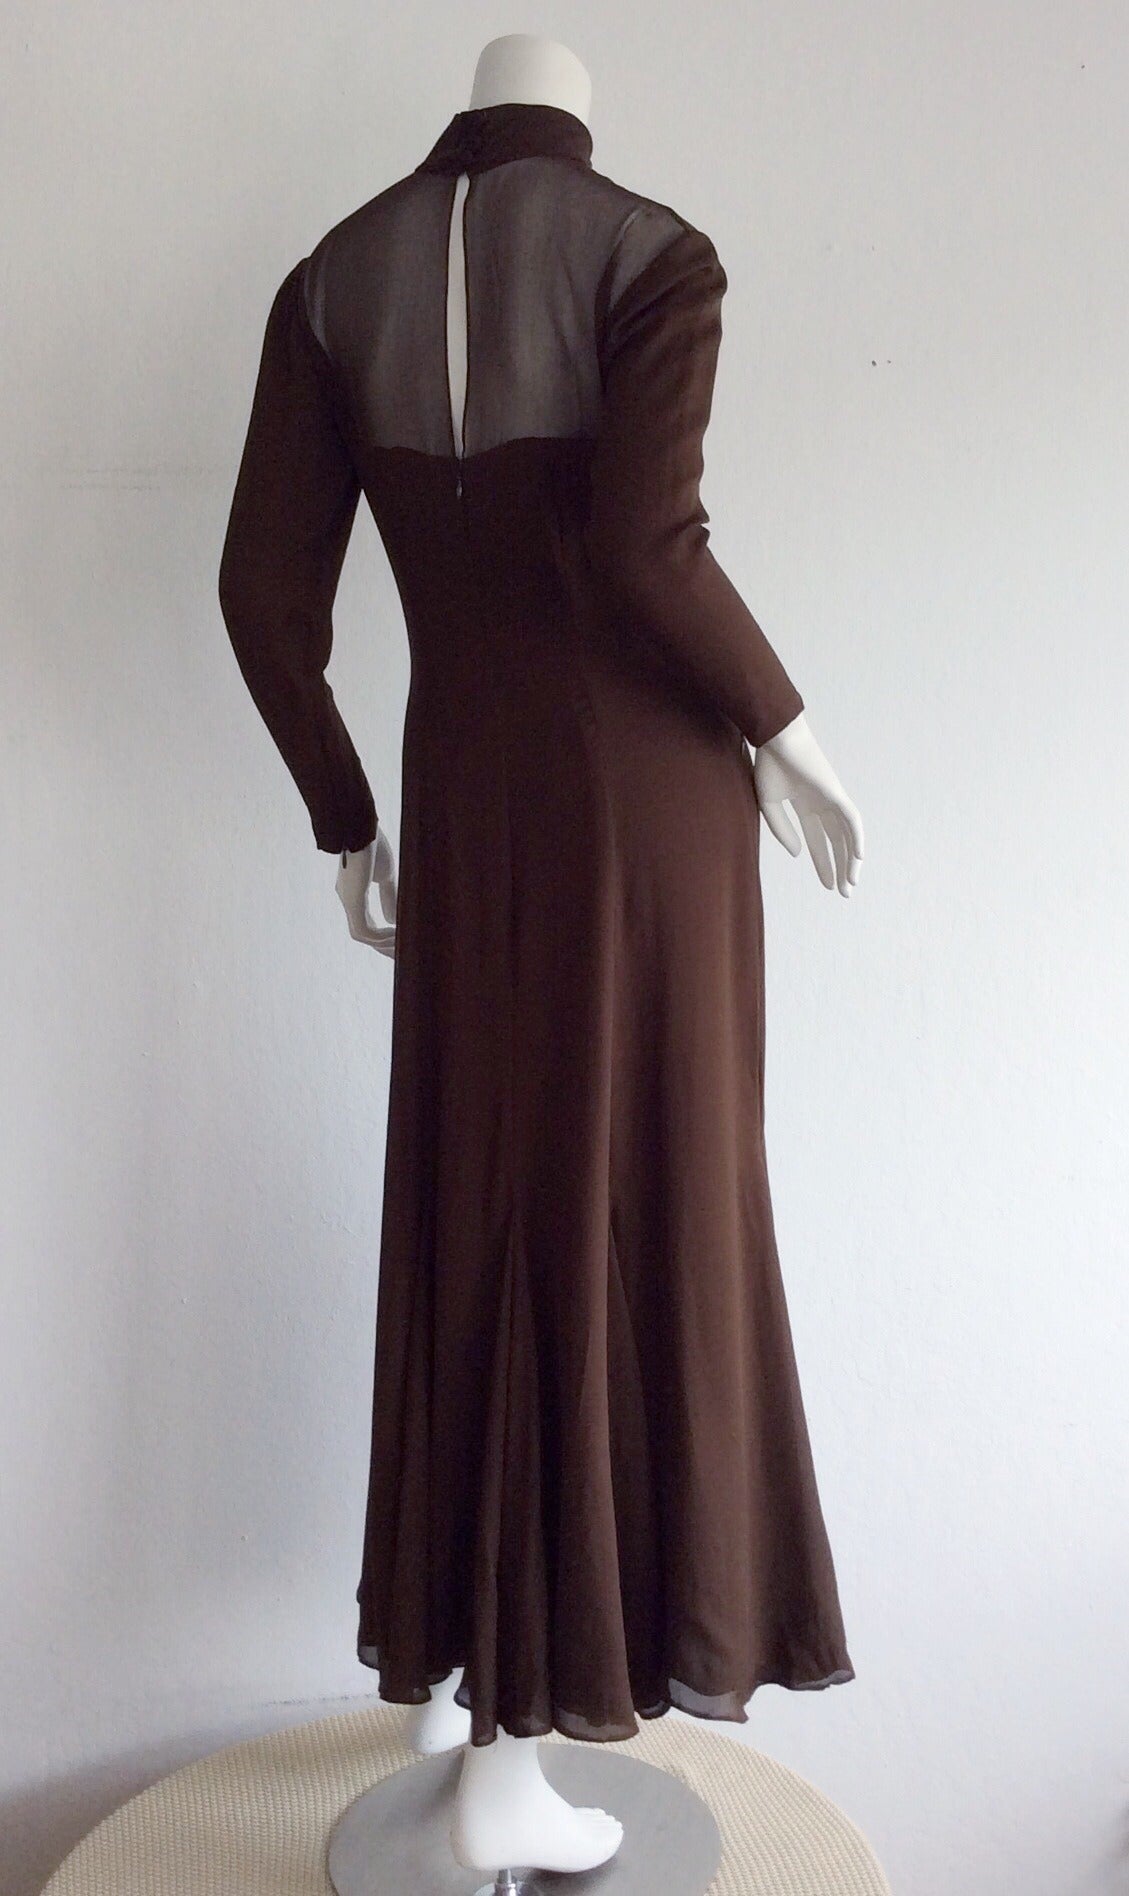 Black Beautiful Nolan Miller Couture Vintage Chocolate Brown Chiffon Flowy Dress